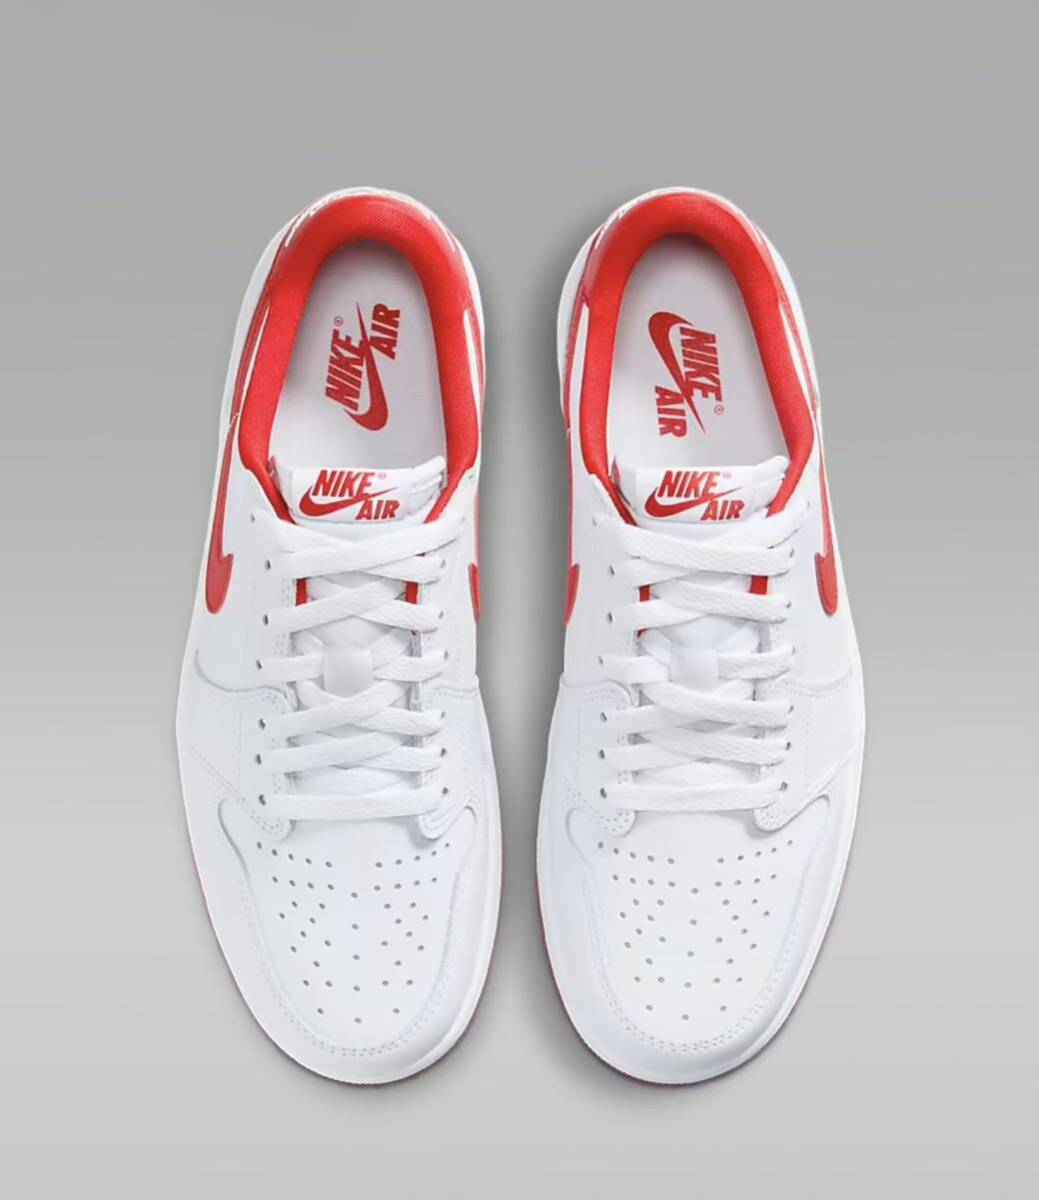 Nike Air Jordan 1 Retro LowOG White and University Redナイキ エアジョーダン1 レトロ ロー OG ホワイト アンド ユニバーシティレッド_画像4